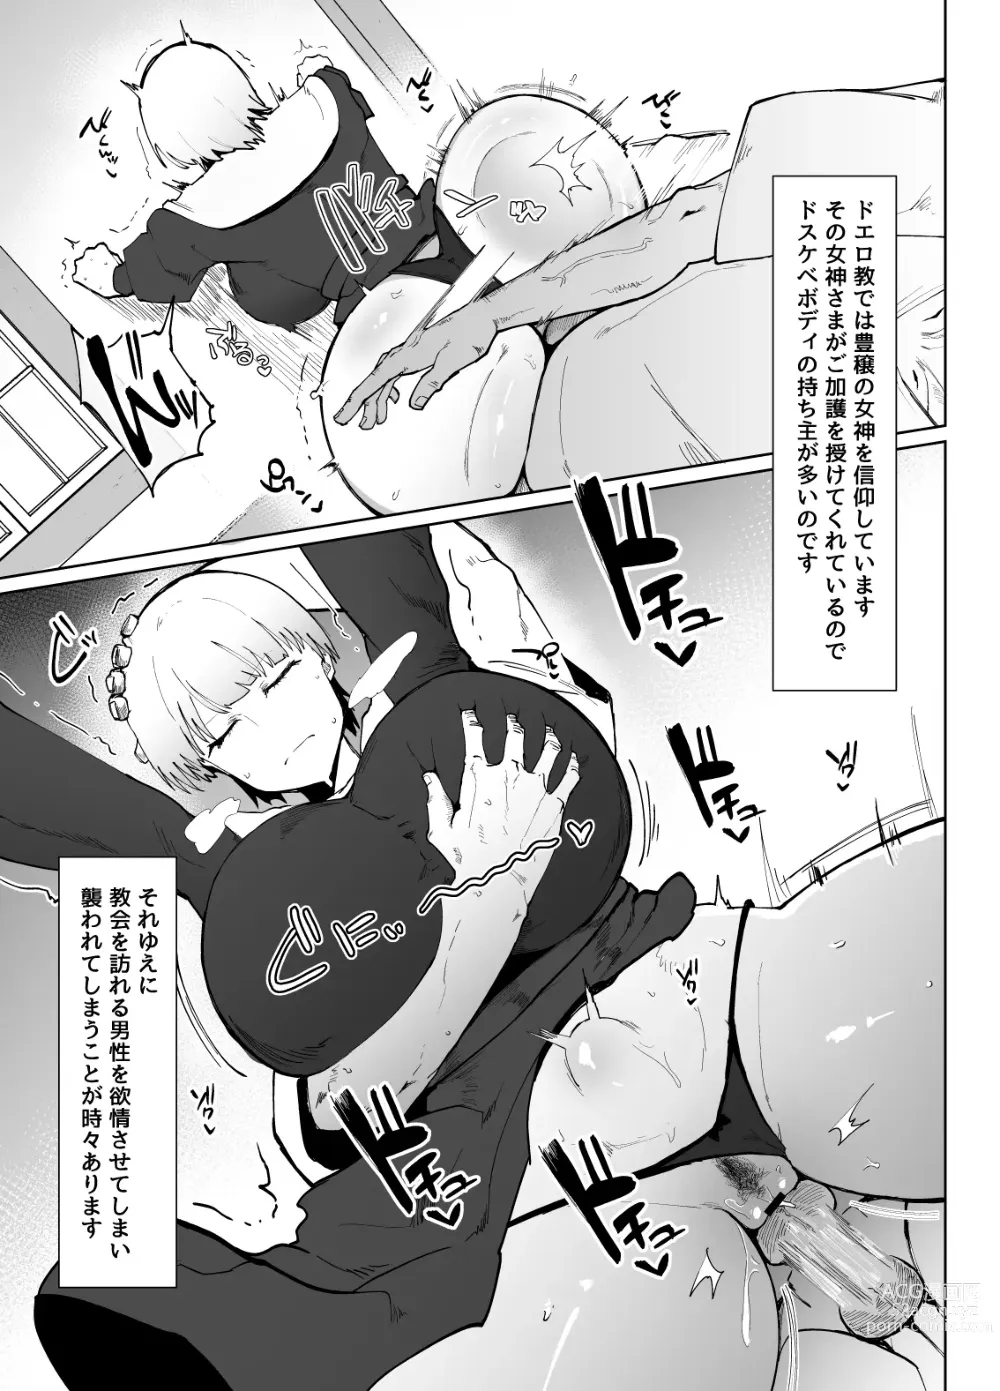 Page 6 of doujinshi 糸目でデカケツで絶対に孕まないオナホシスター